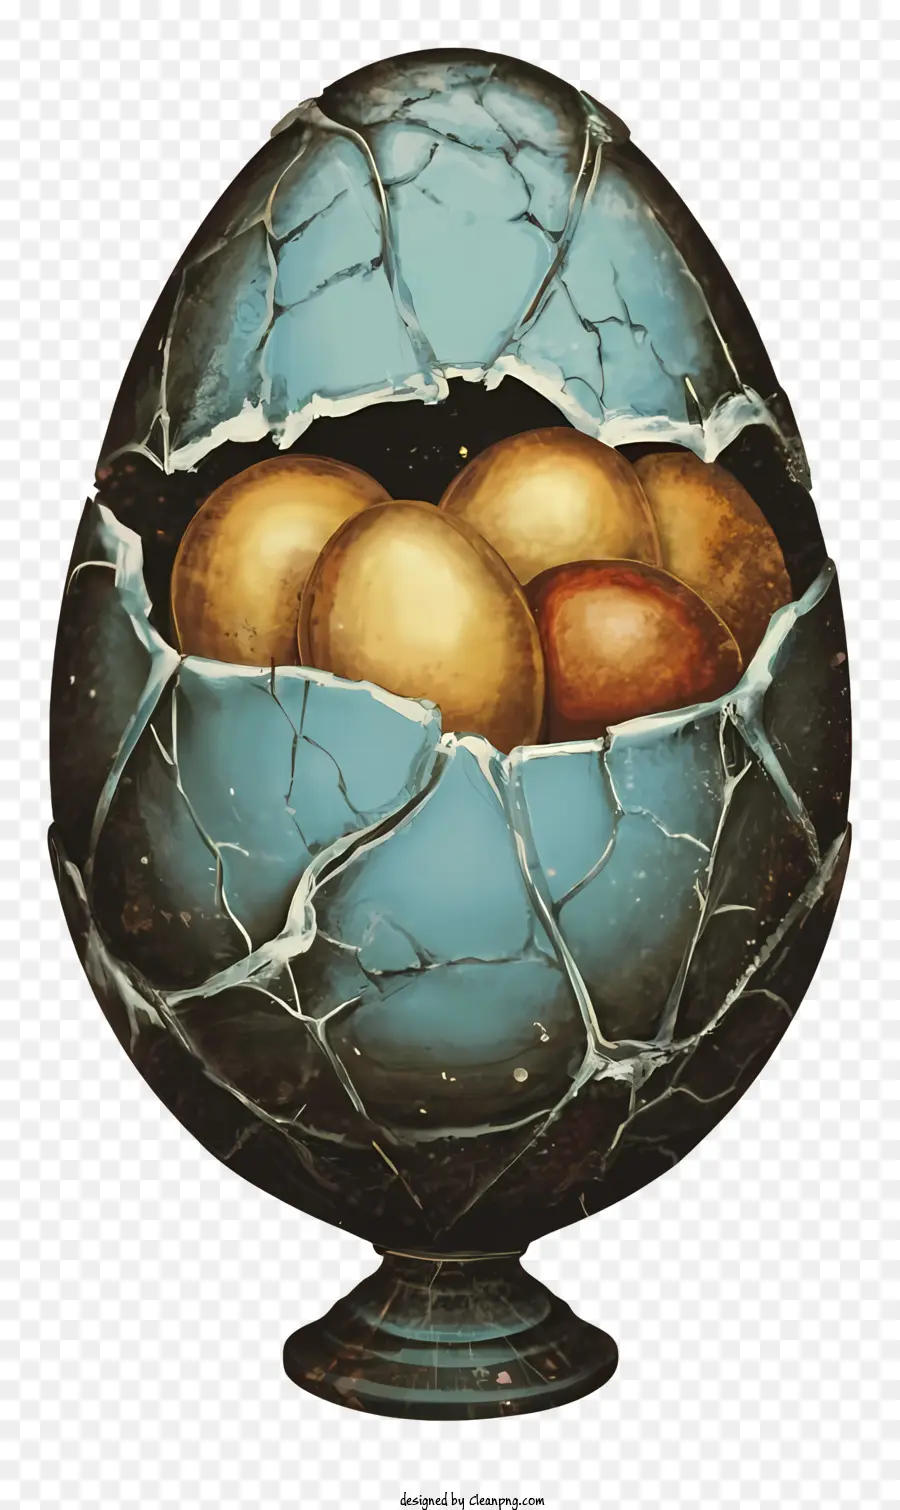 broken eggs cracked eggshell yellow eggs brown eggs exposed yolks